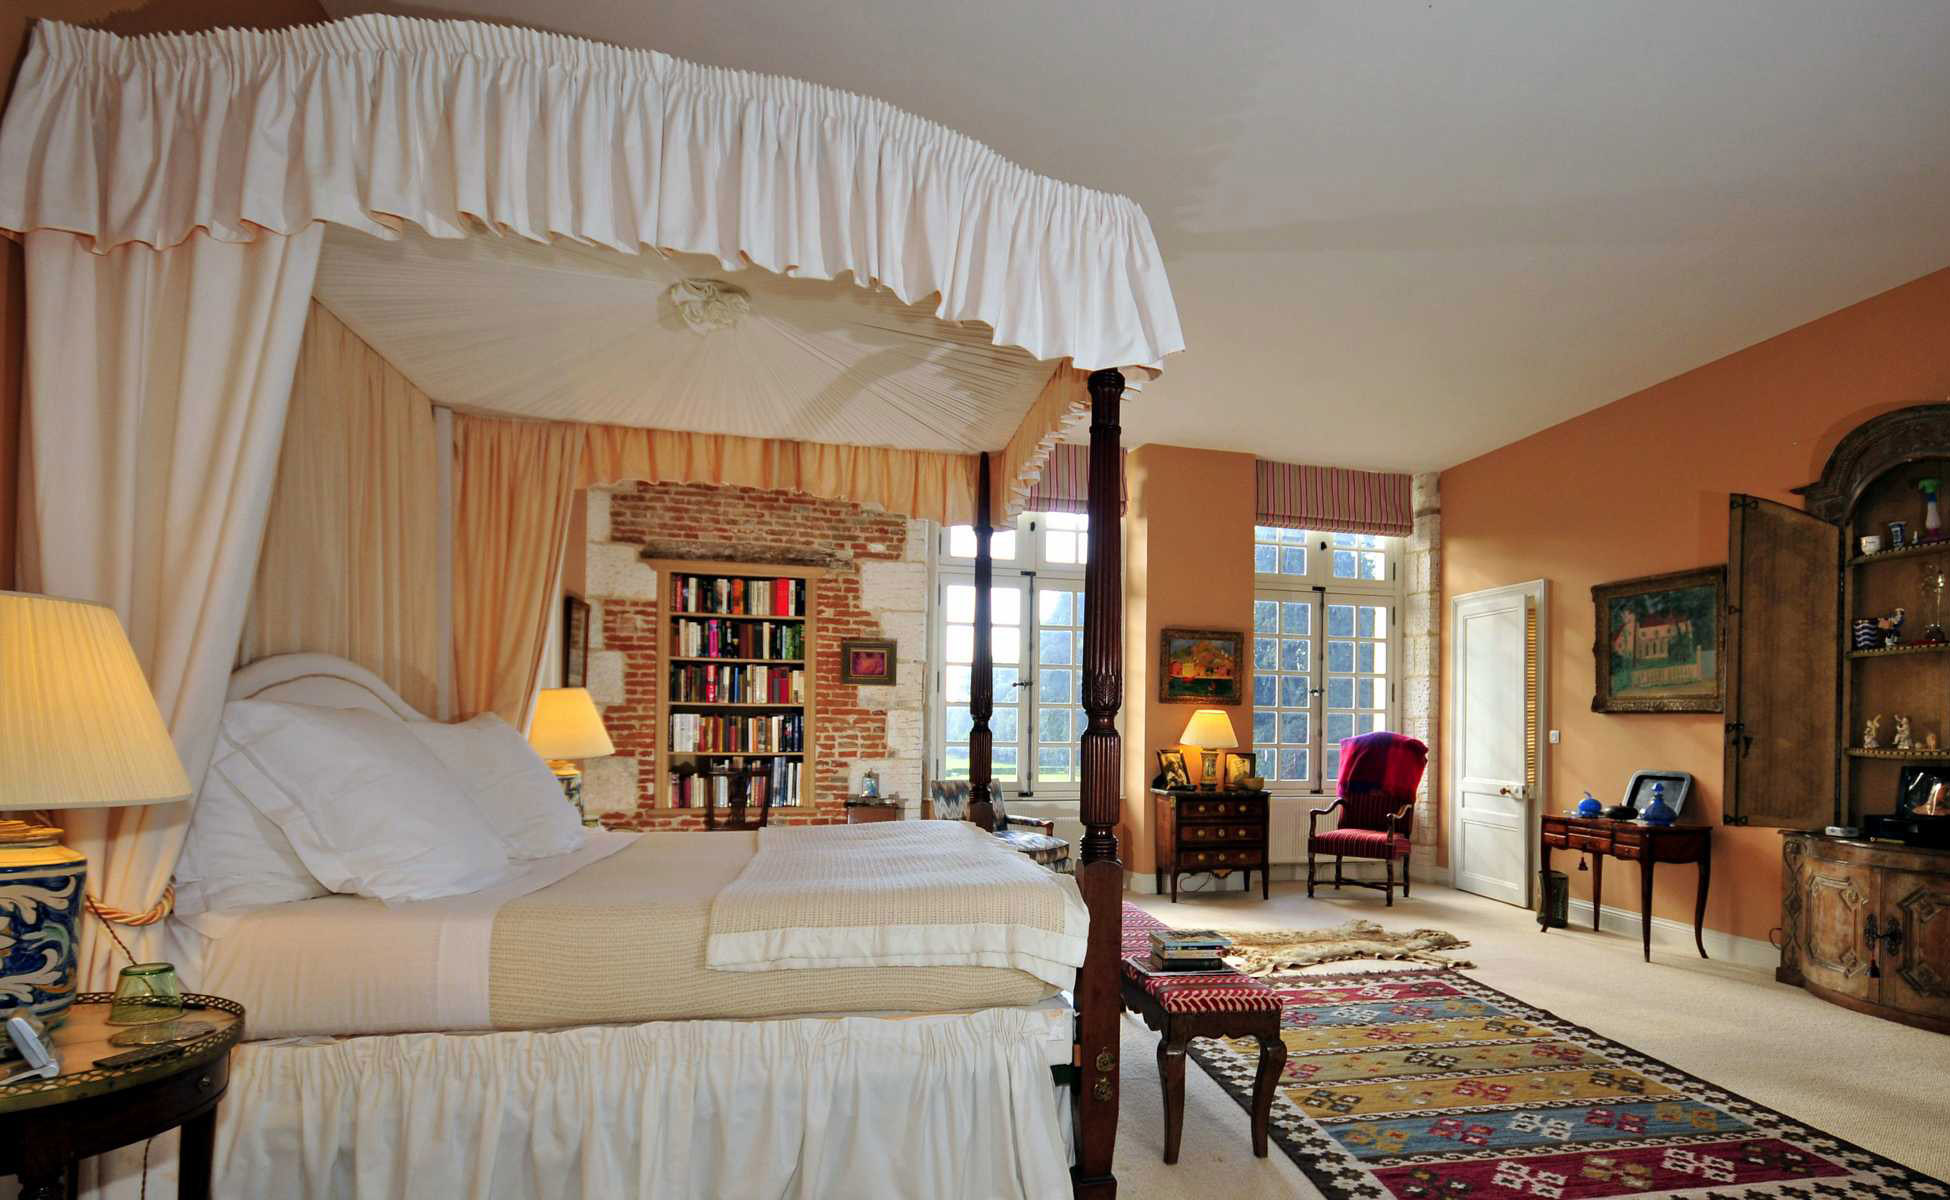 Lovelydays luxury service apartment rental - Saint-Maclou - Chateau Edouard - Lovelysuite - 5 bedrooms - 5 bathrooms - King bed - c584d7601824 - Lovelydays